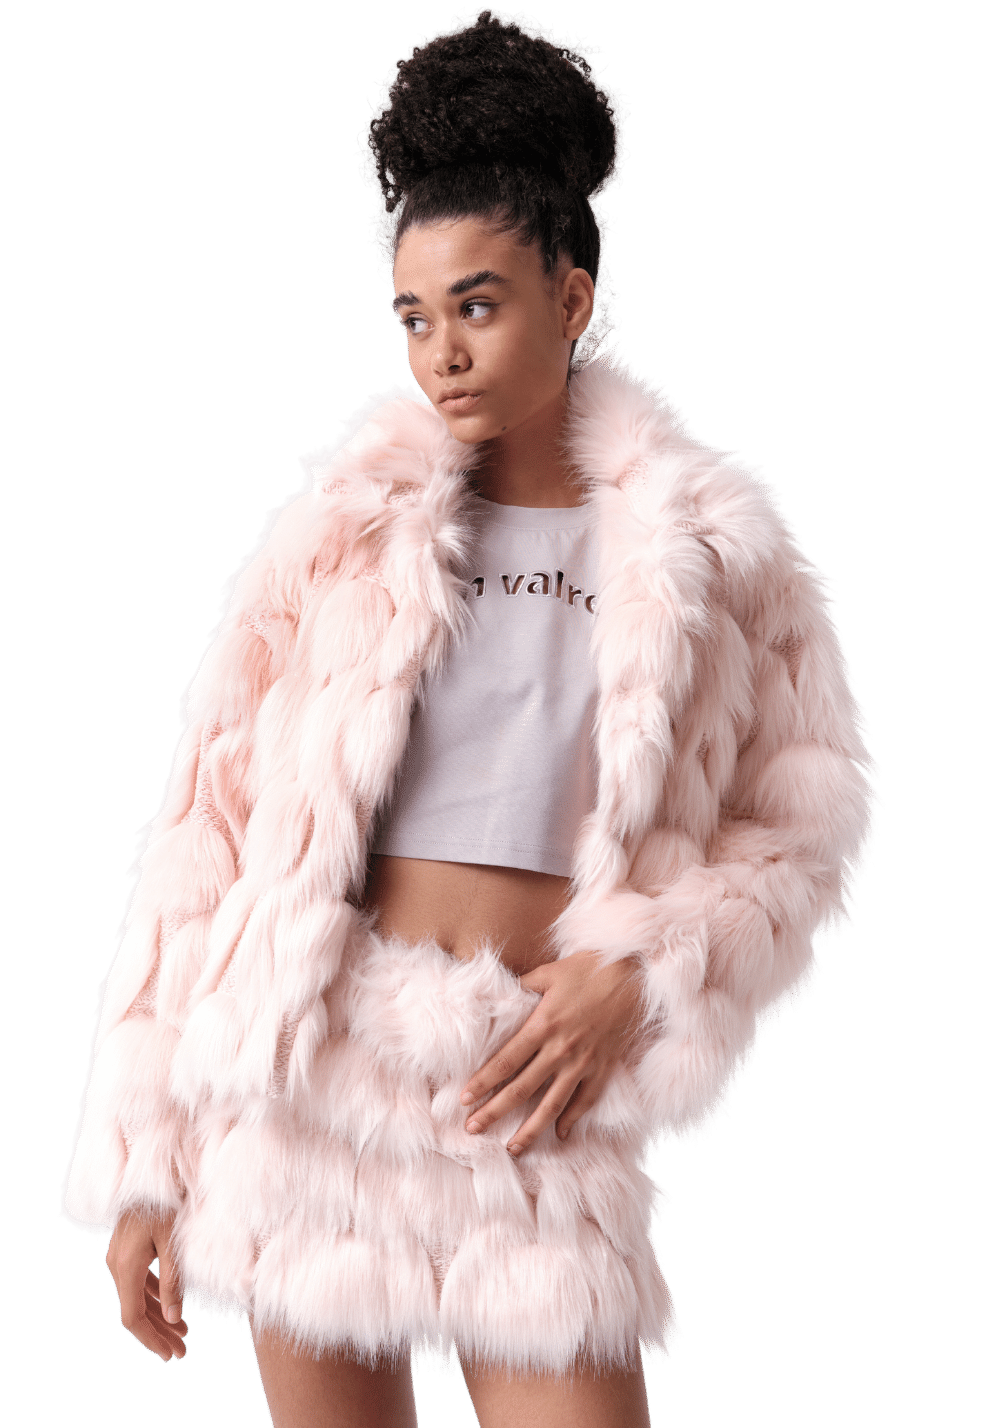 Pink Fur Coat - PSYLOS 1, Pink Fur Coat, Jacket, VANN VALRENCÉ, PSYLOS 1